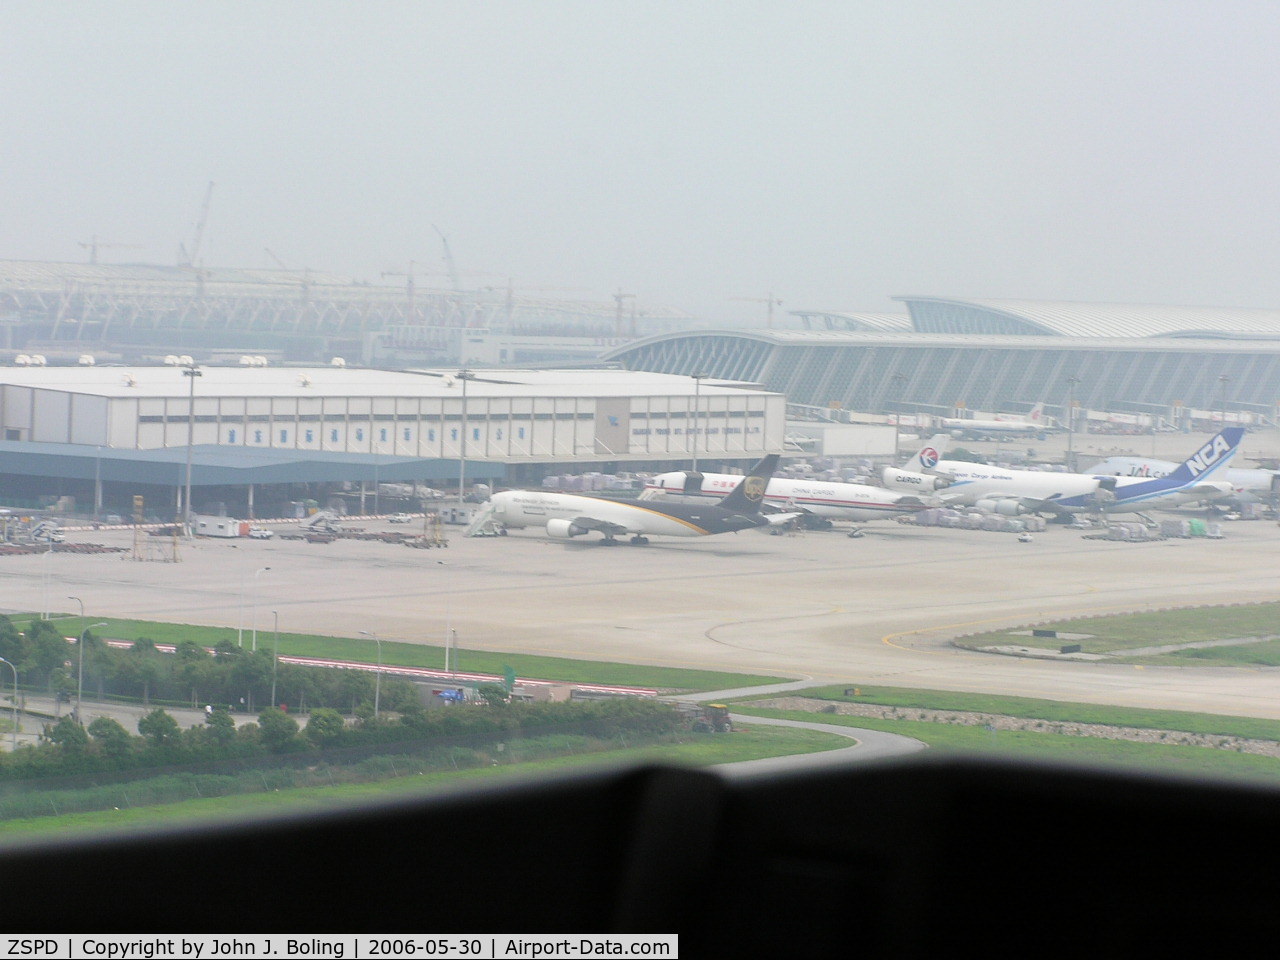 Shanghai Pudong International Airport, Shanghai China (ZSPD) - Cargo ramp at Shanghai Pu Dong Airport